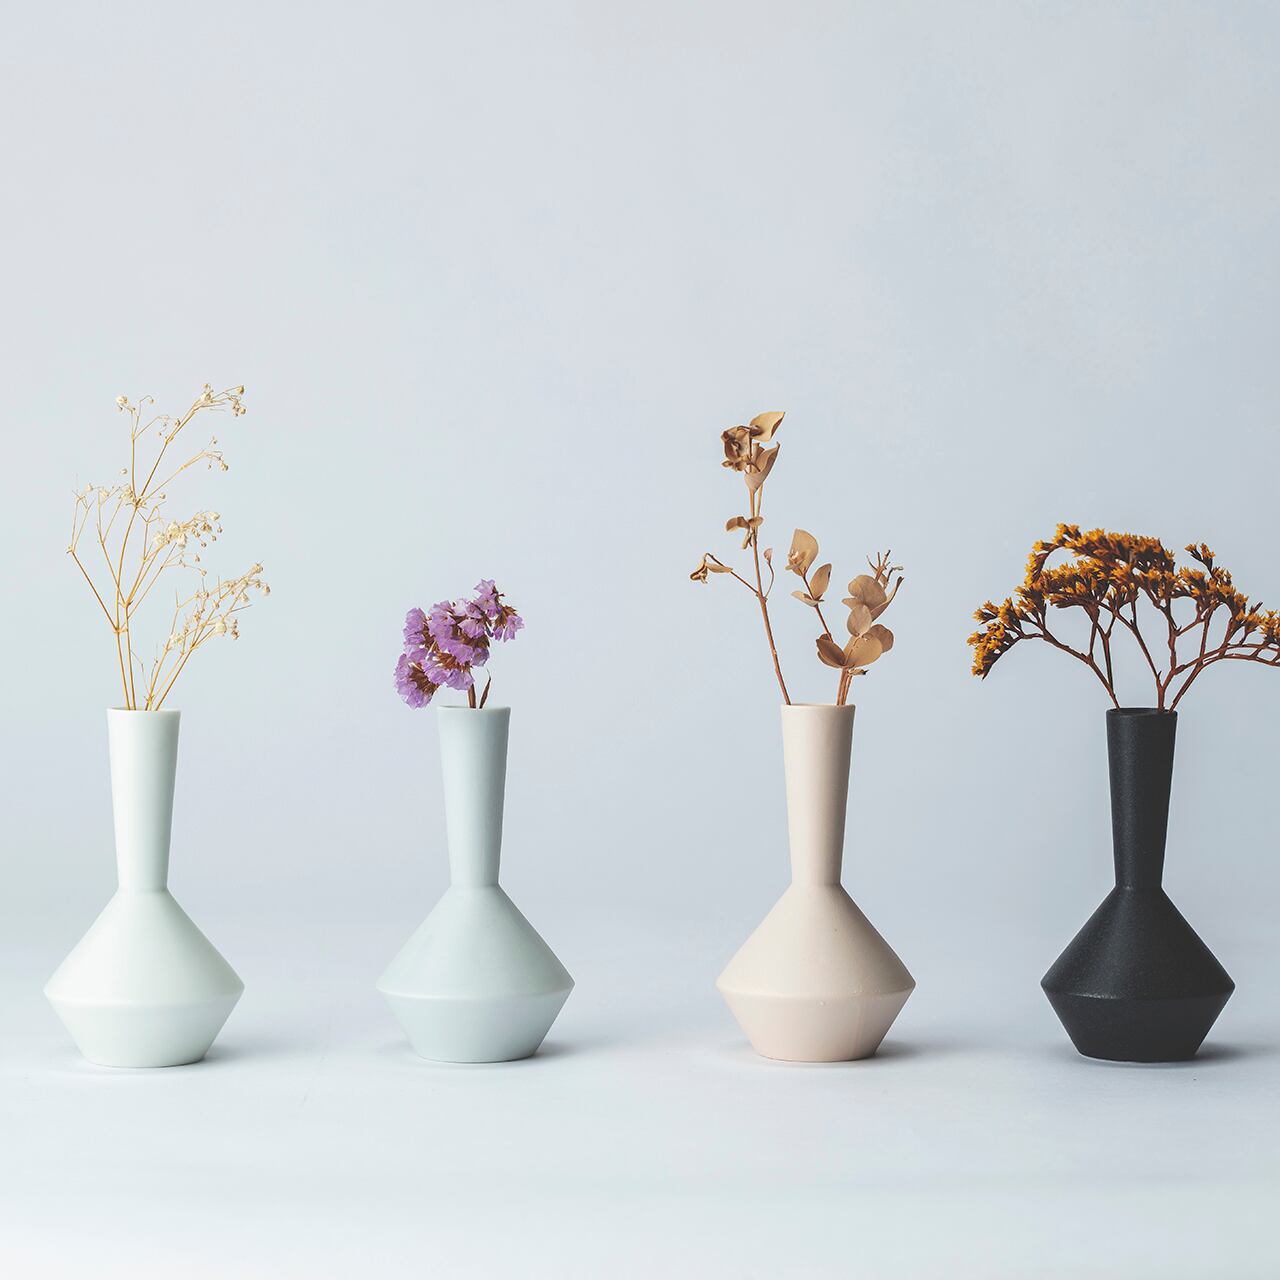 Frustum single flower vase